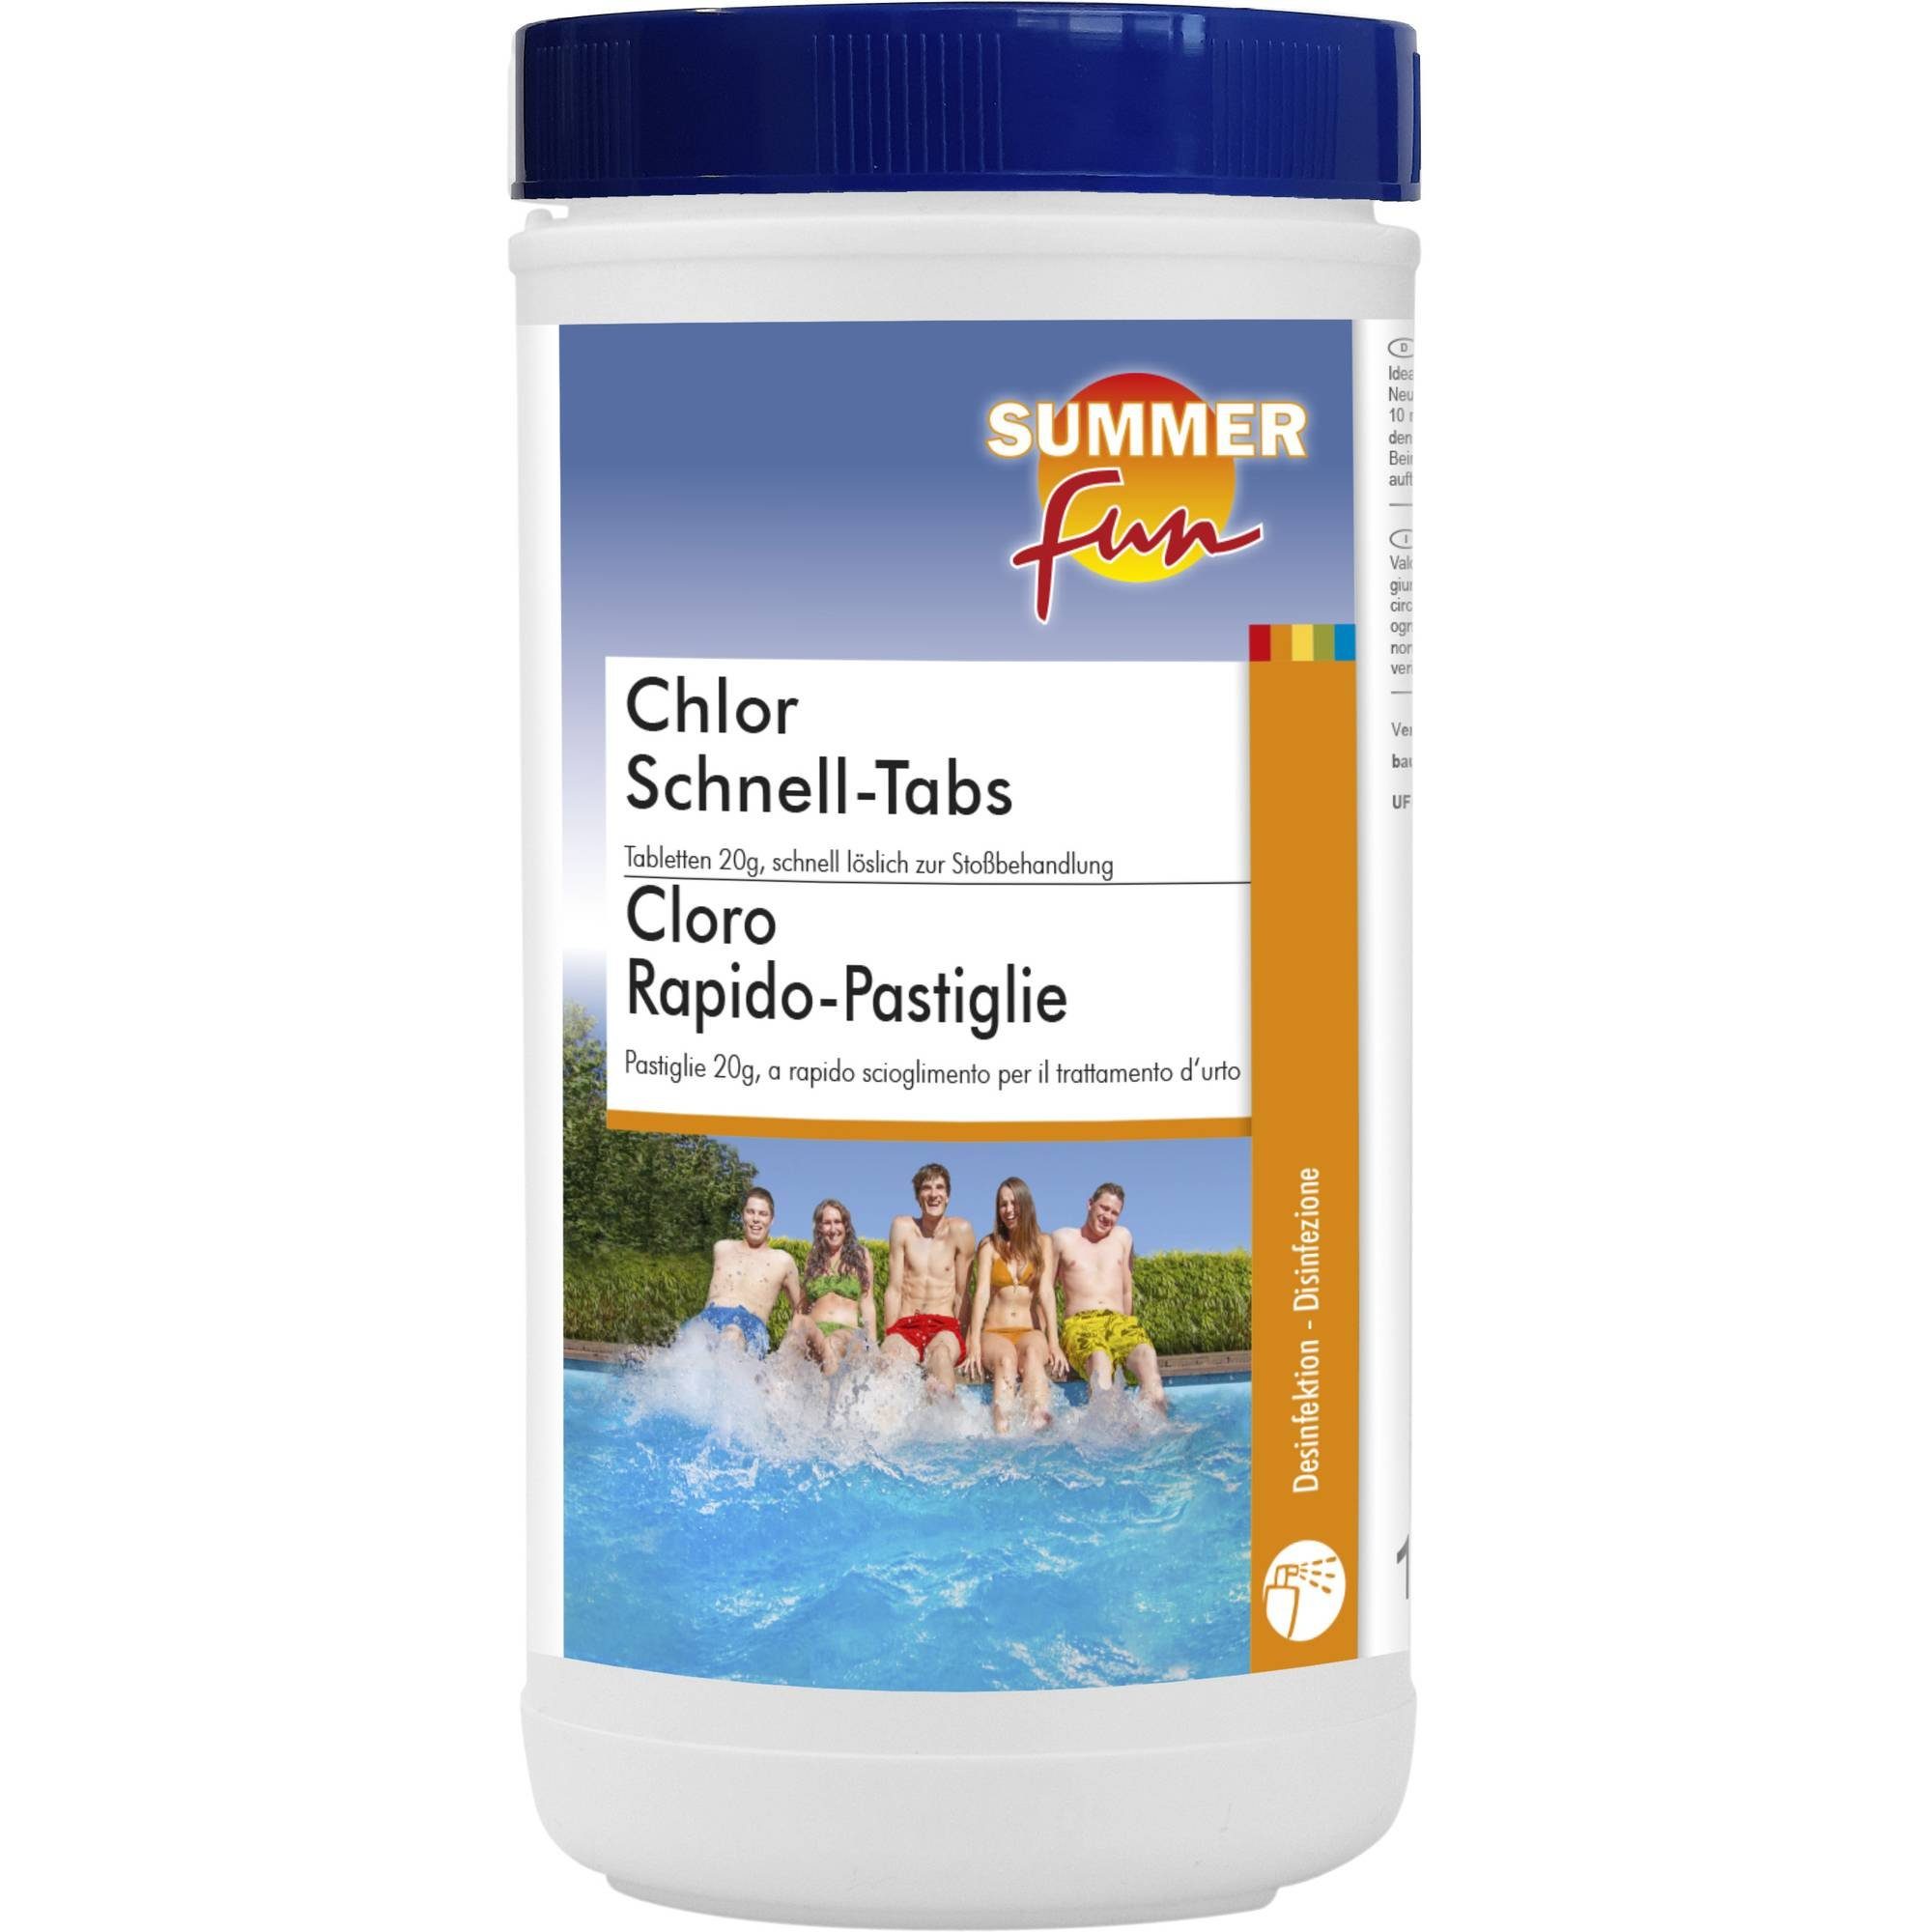 SUMMER FUN Poolpflege Summer Fun - Chlor Schnell-Tabs - 20g Tabletten, 1